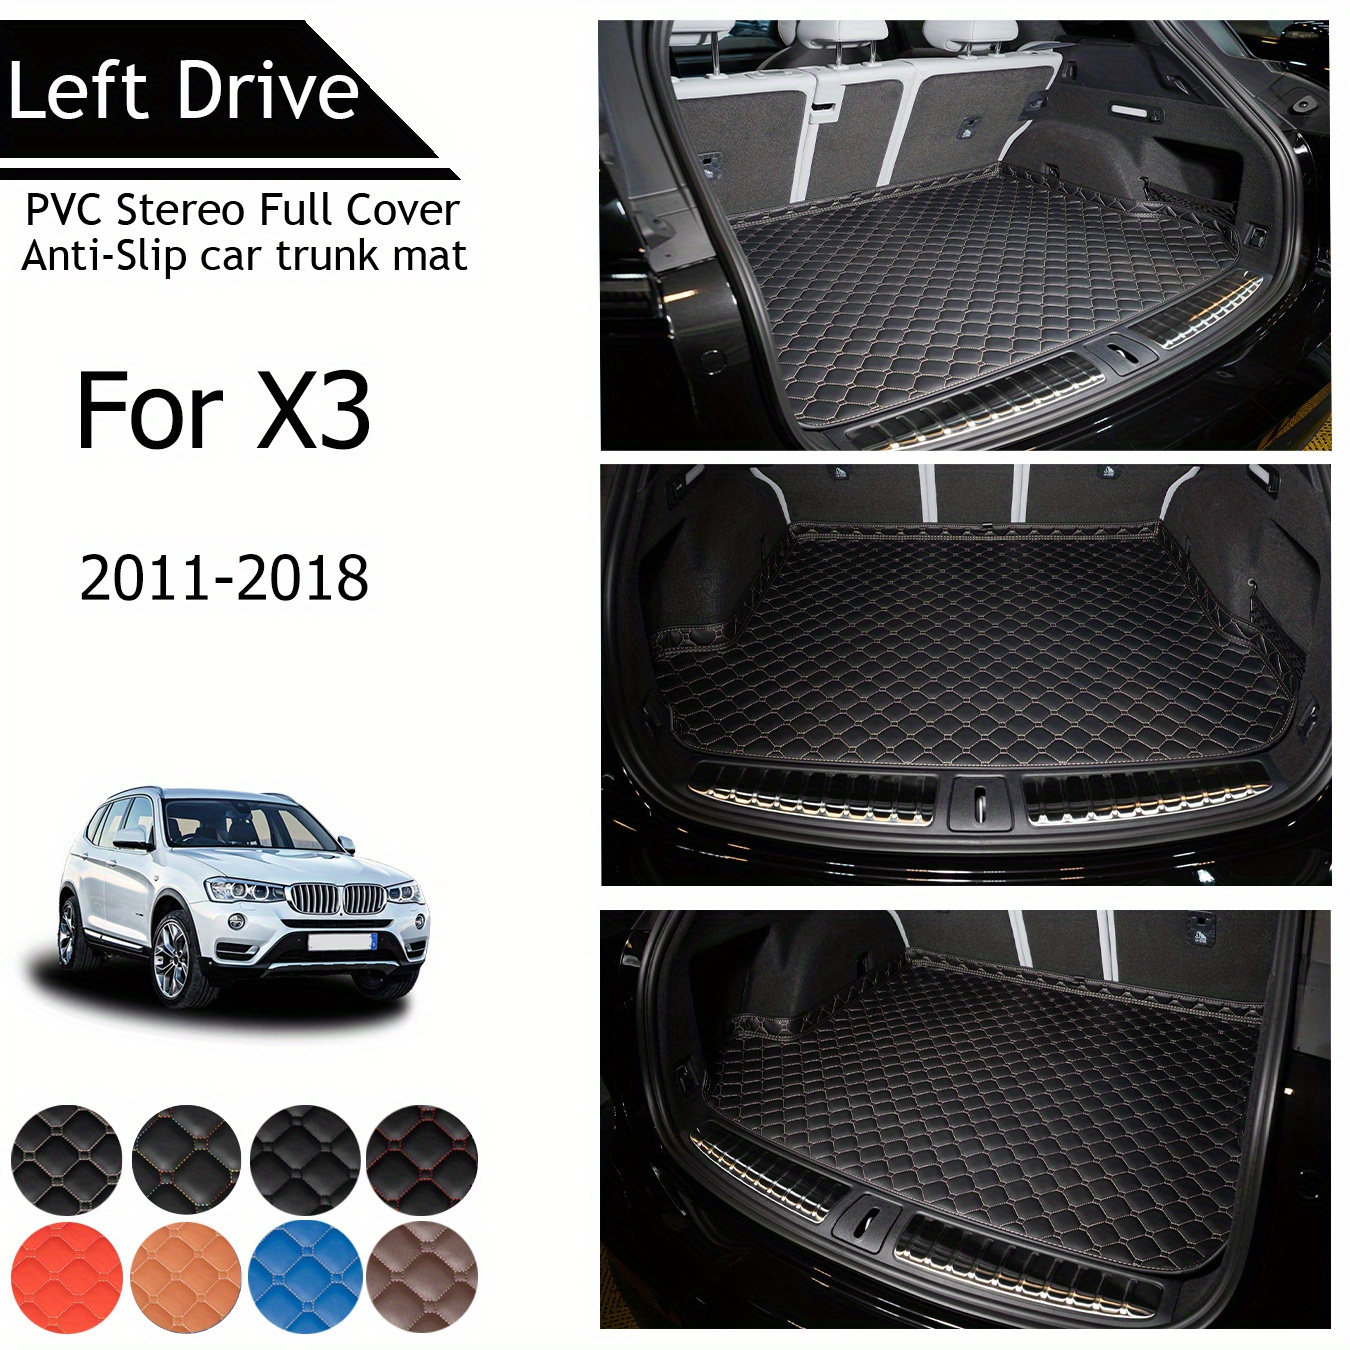 

Tegart [lhd] For X3 2011-2018 3 Layers Pvc Stereo Full Cover Anti-slip Car Trunk Mat